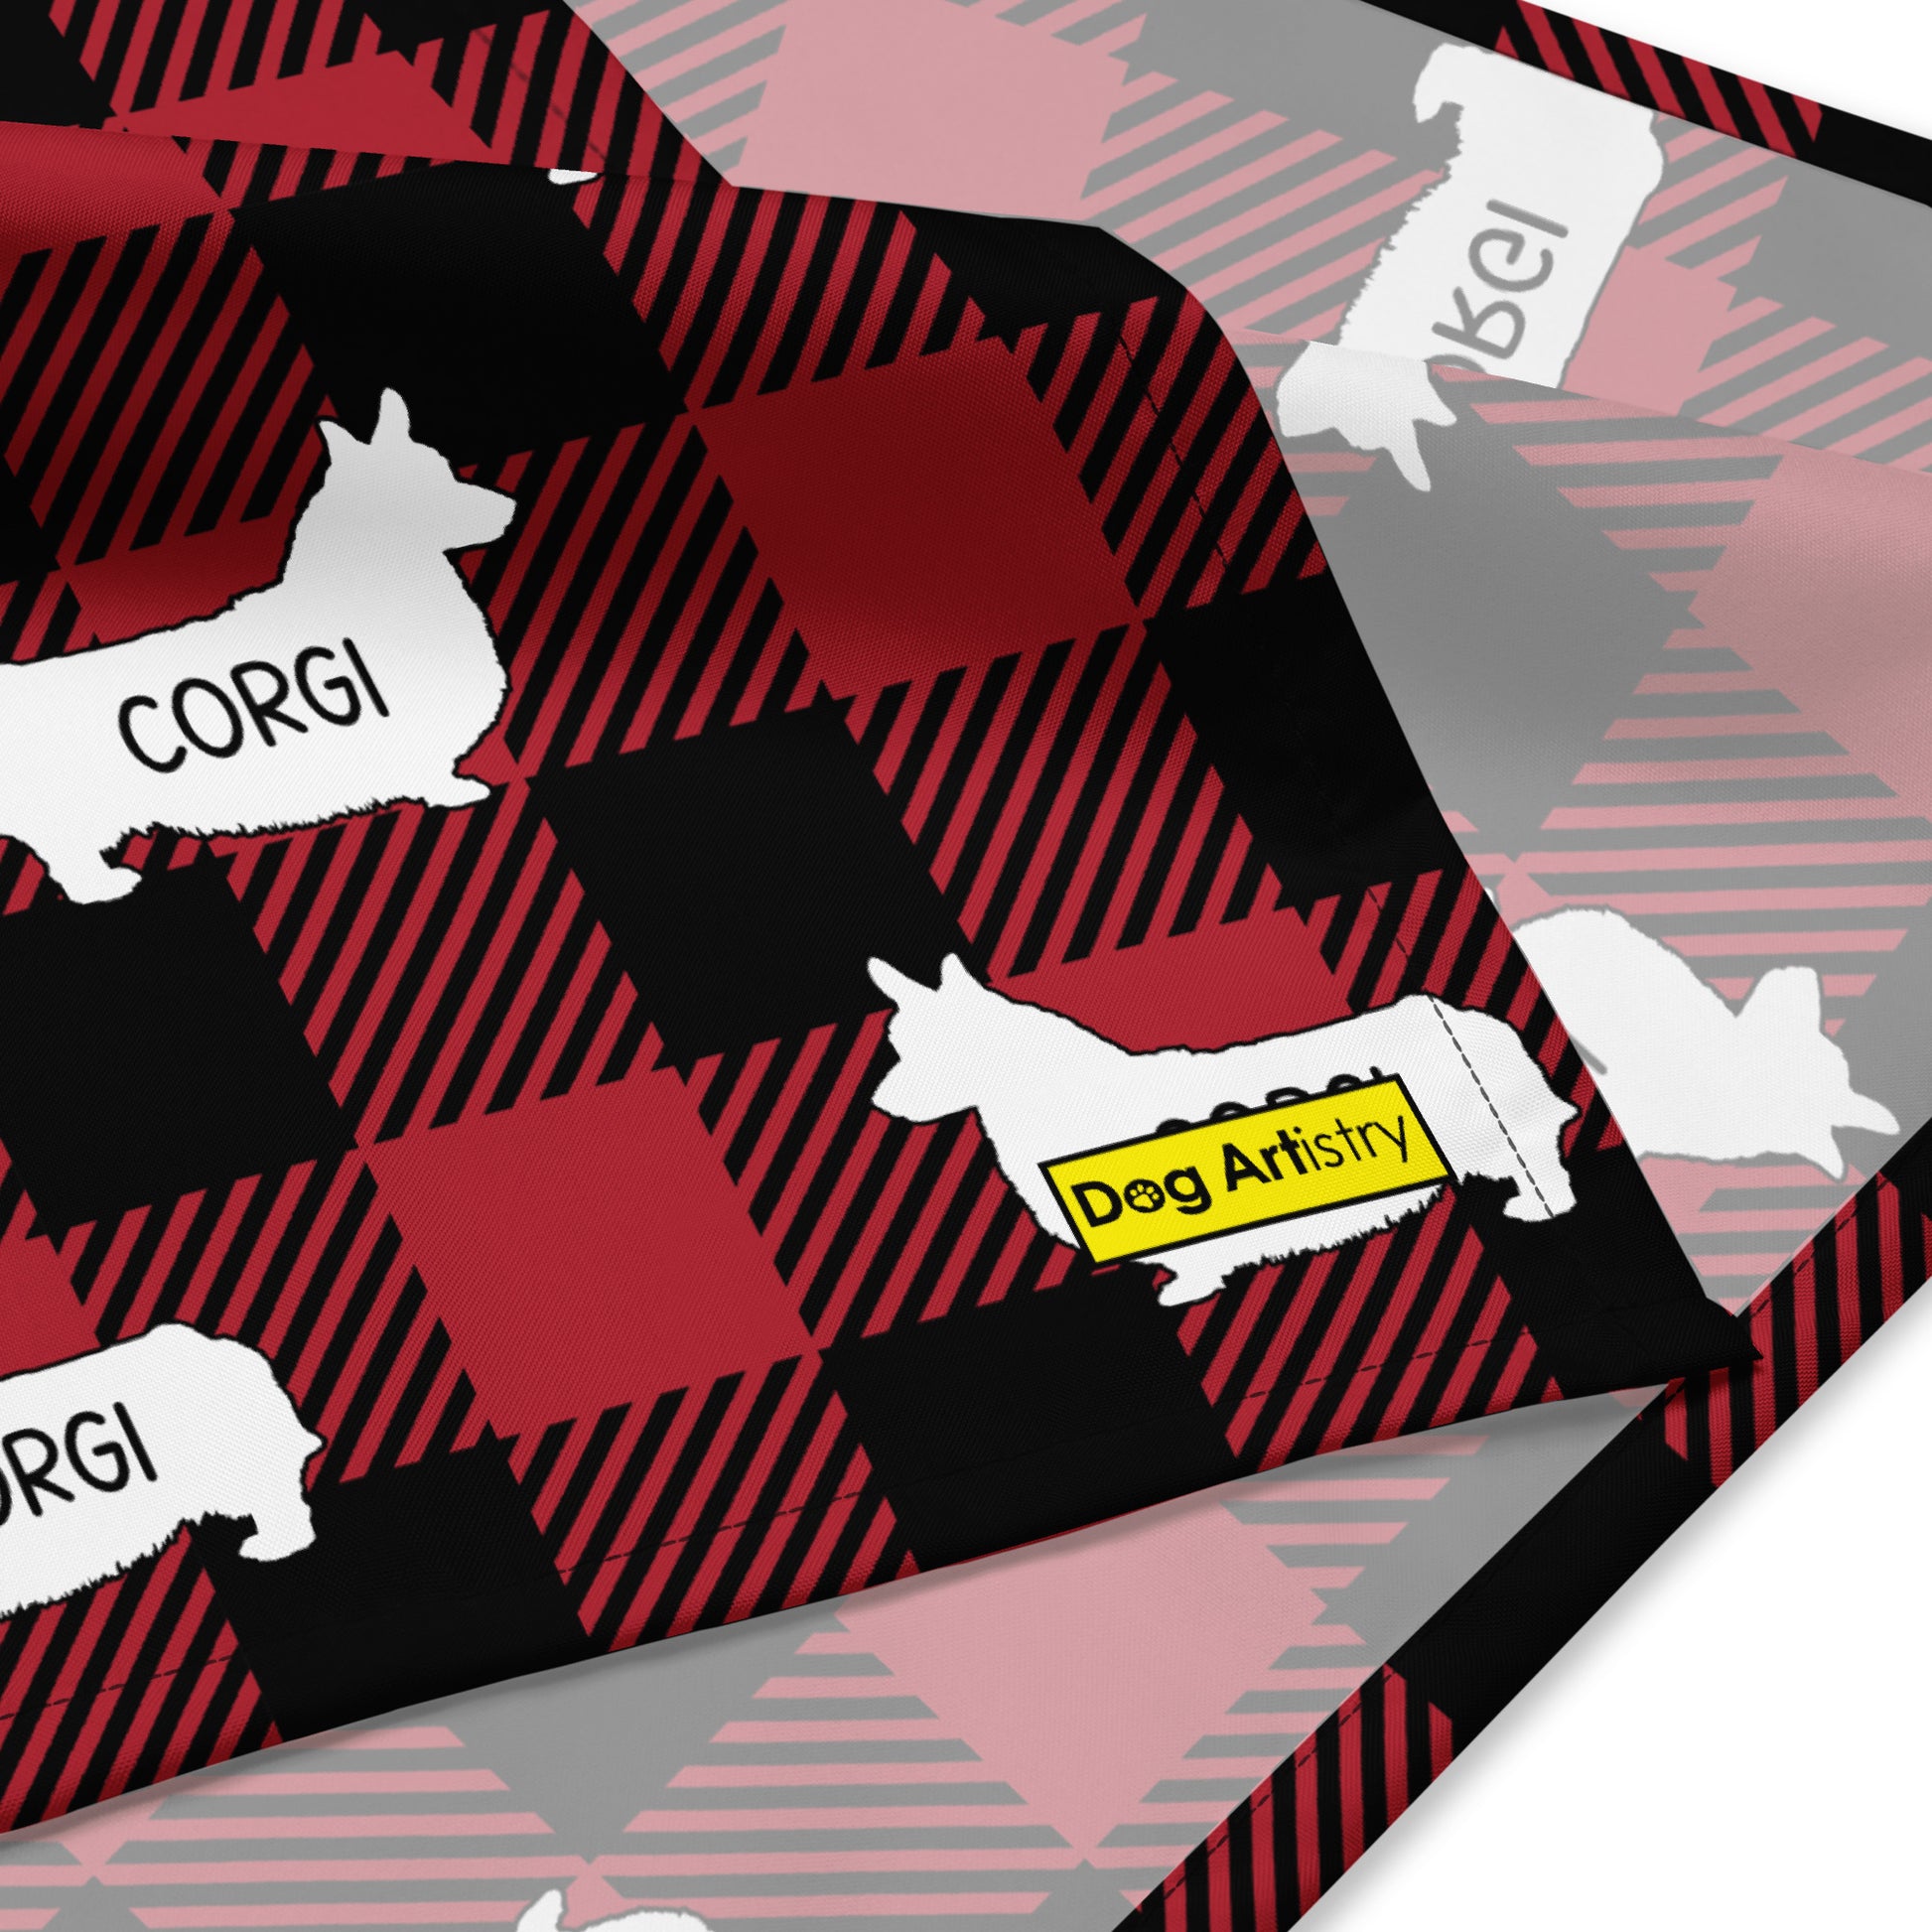 Corgi dark red plaid bandana by Dog Artistry. Close up.